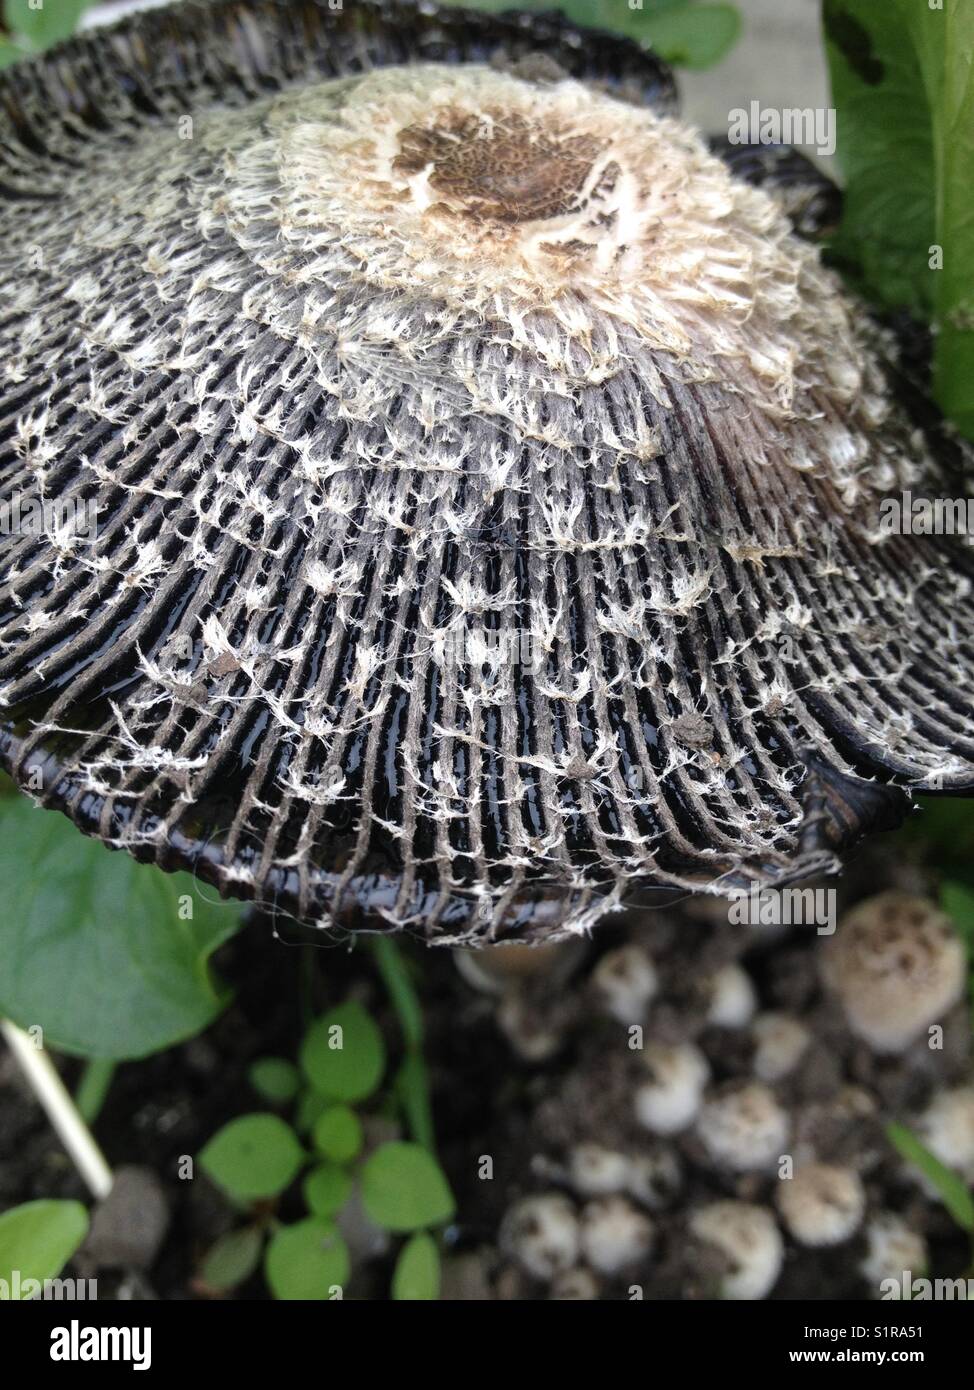 Mushroom growing in the garden Stock Photo